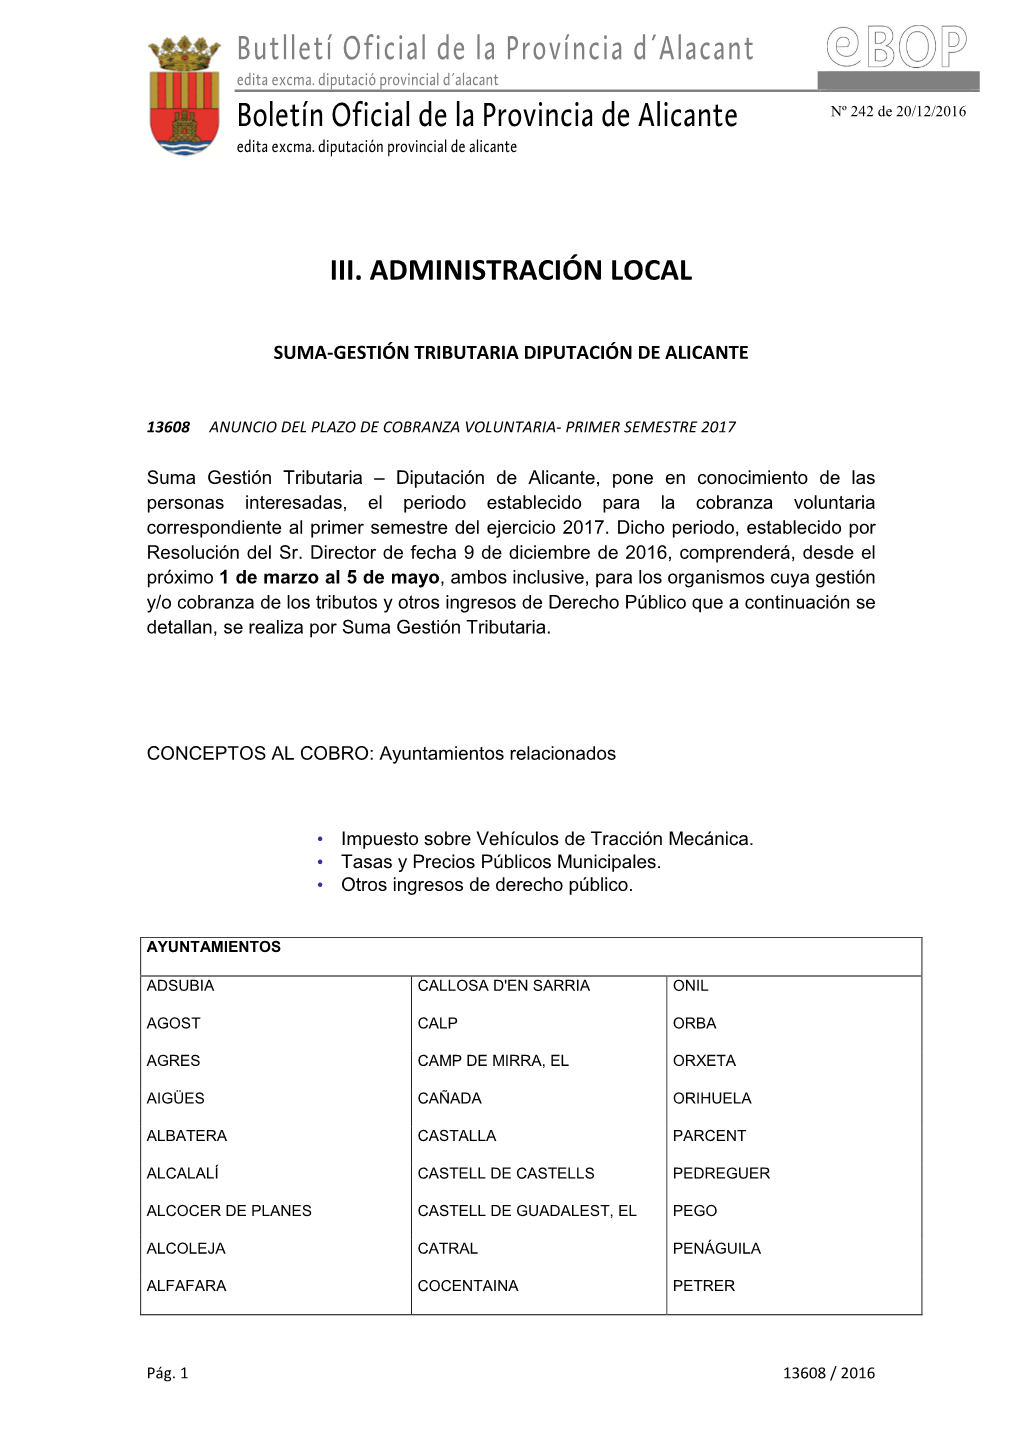 Butlletí Oficial De La Província D´Alacant Boletín Oficial De La Provincia De Alicante